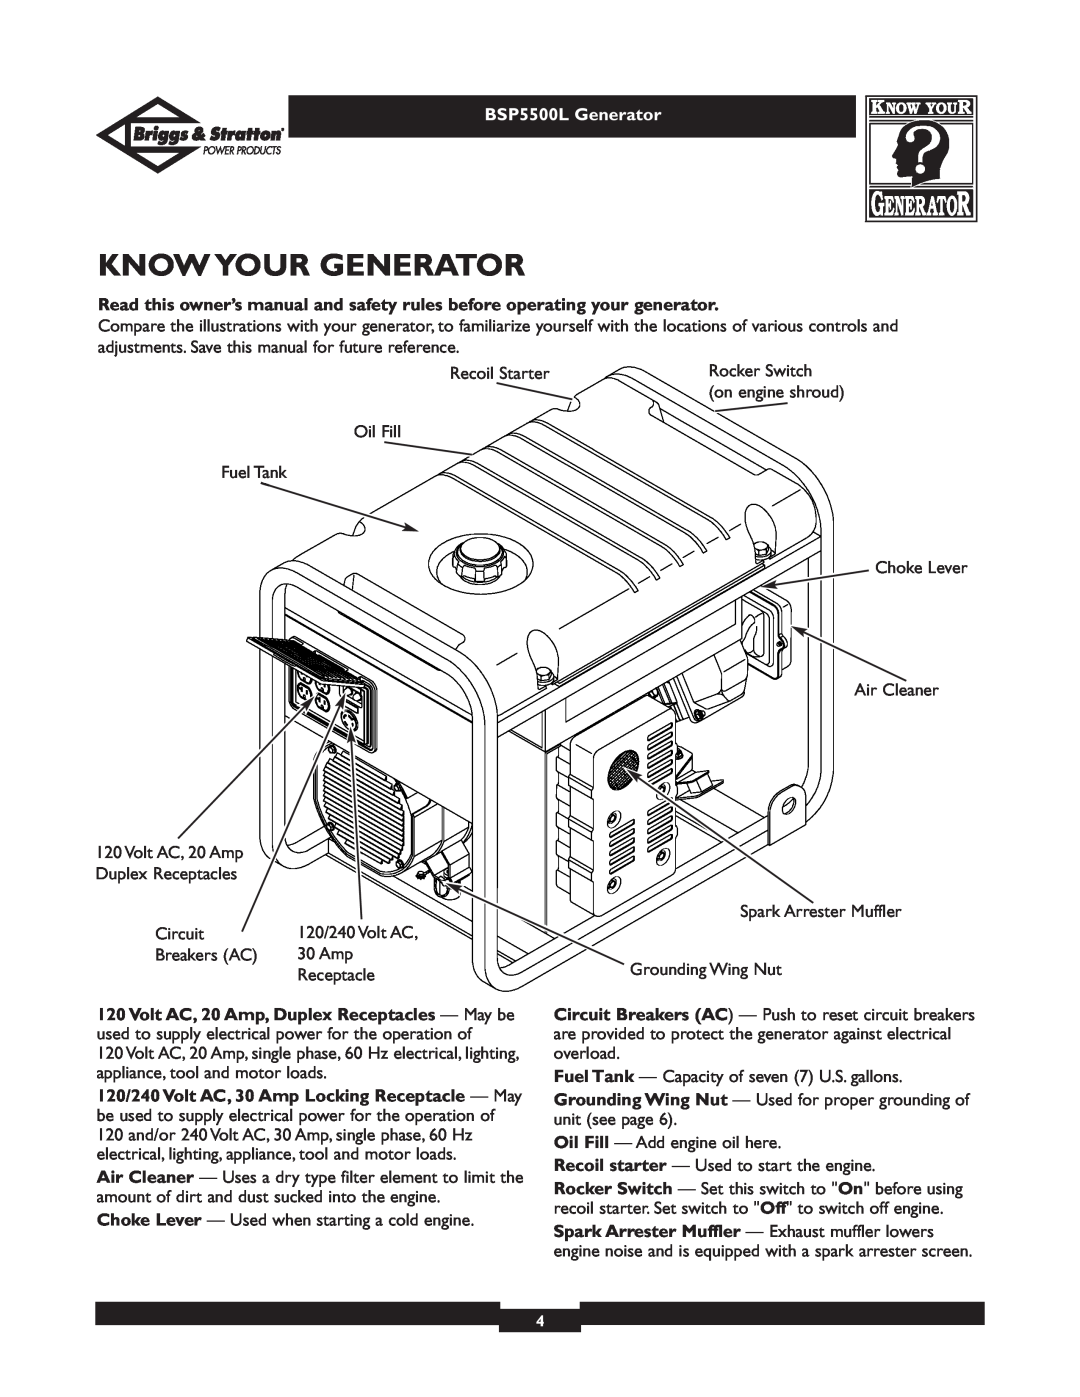 Briggs & Stratton bsp5500l owner manual Know Your Generator, BSP5500L Generator 